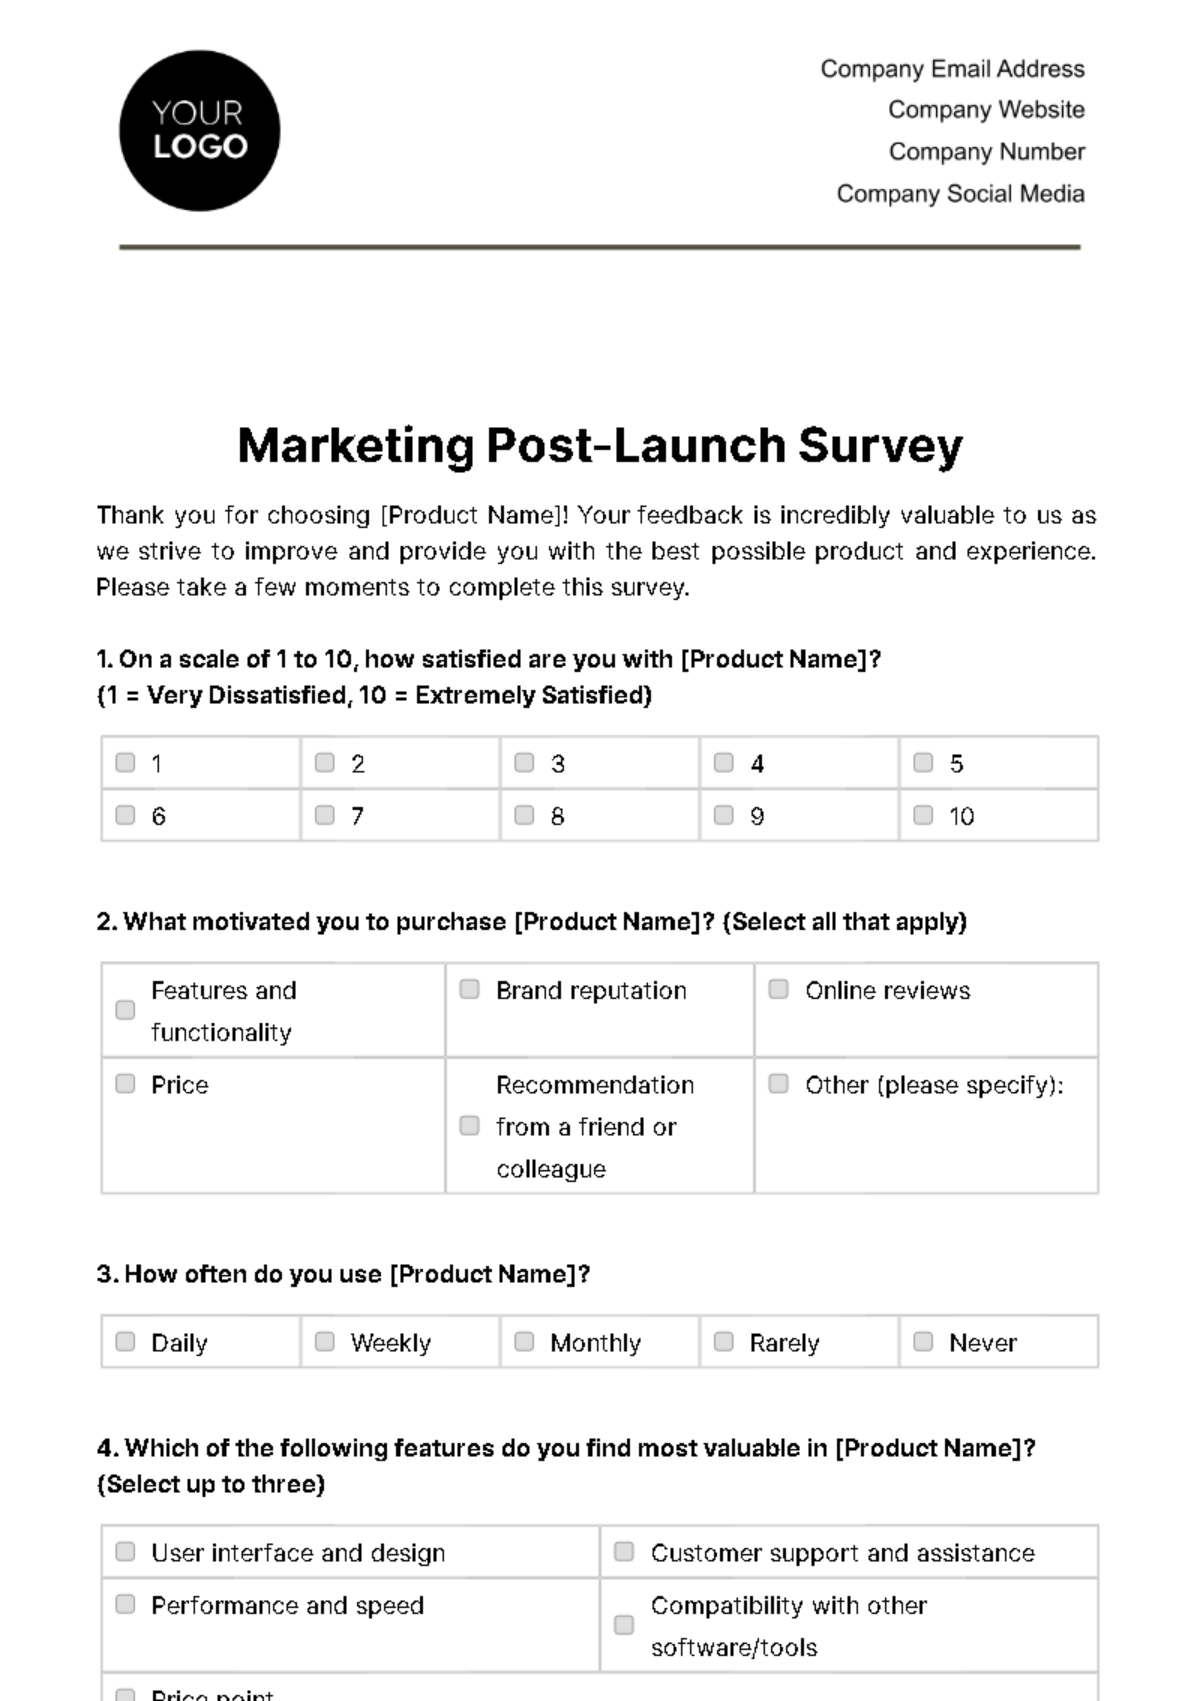 Marketing Post-Launch Survey Template